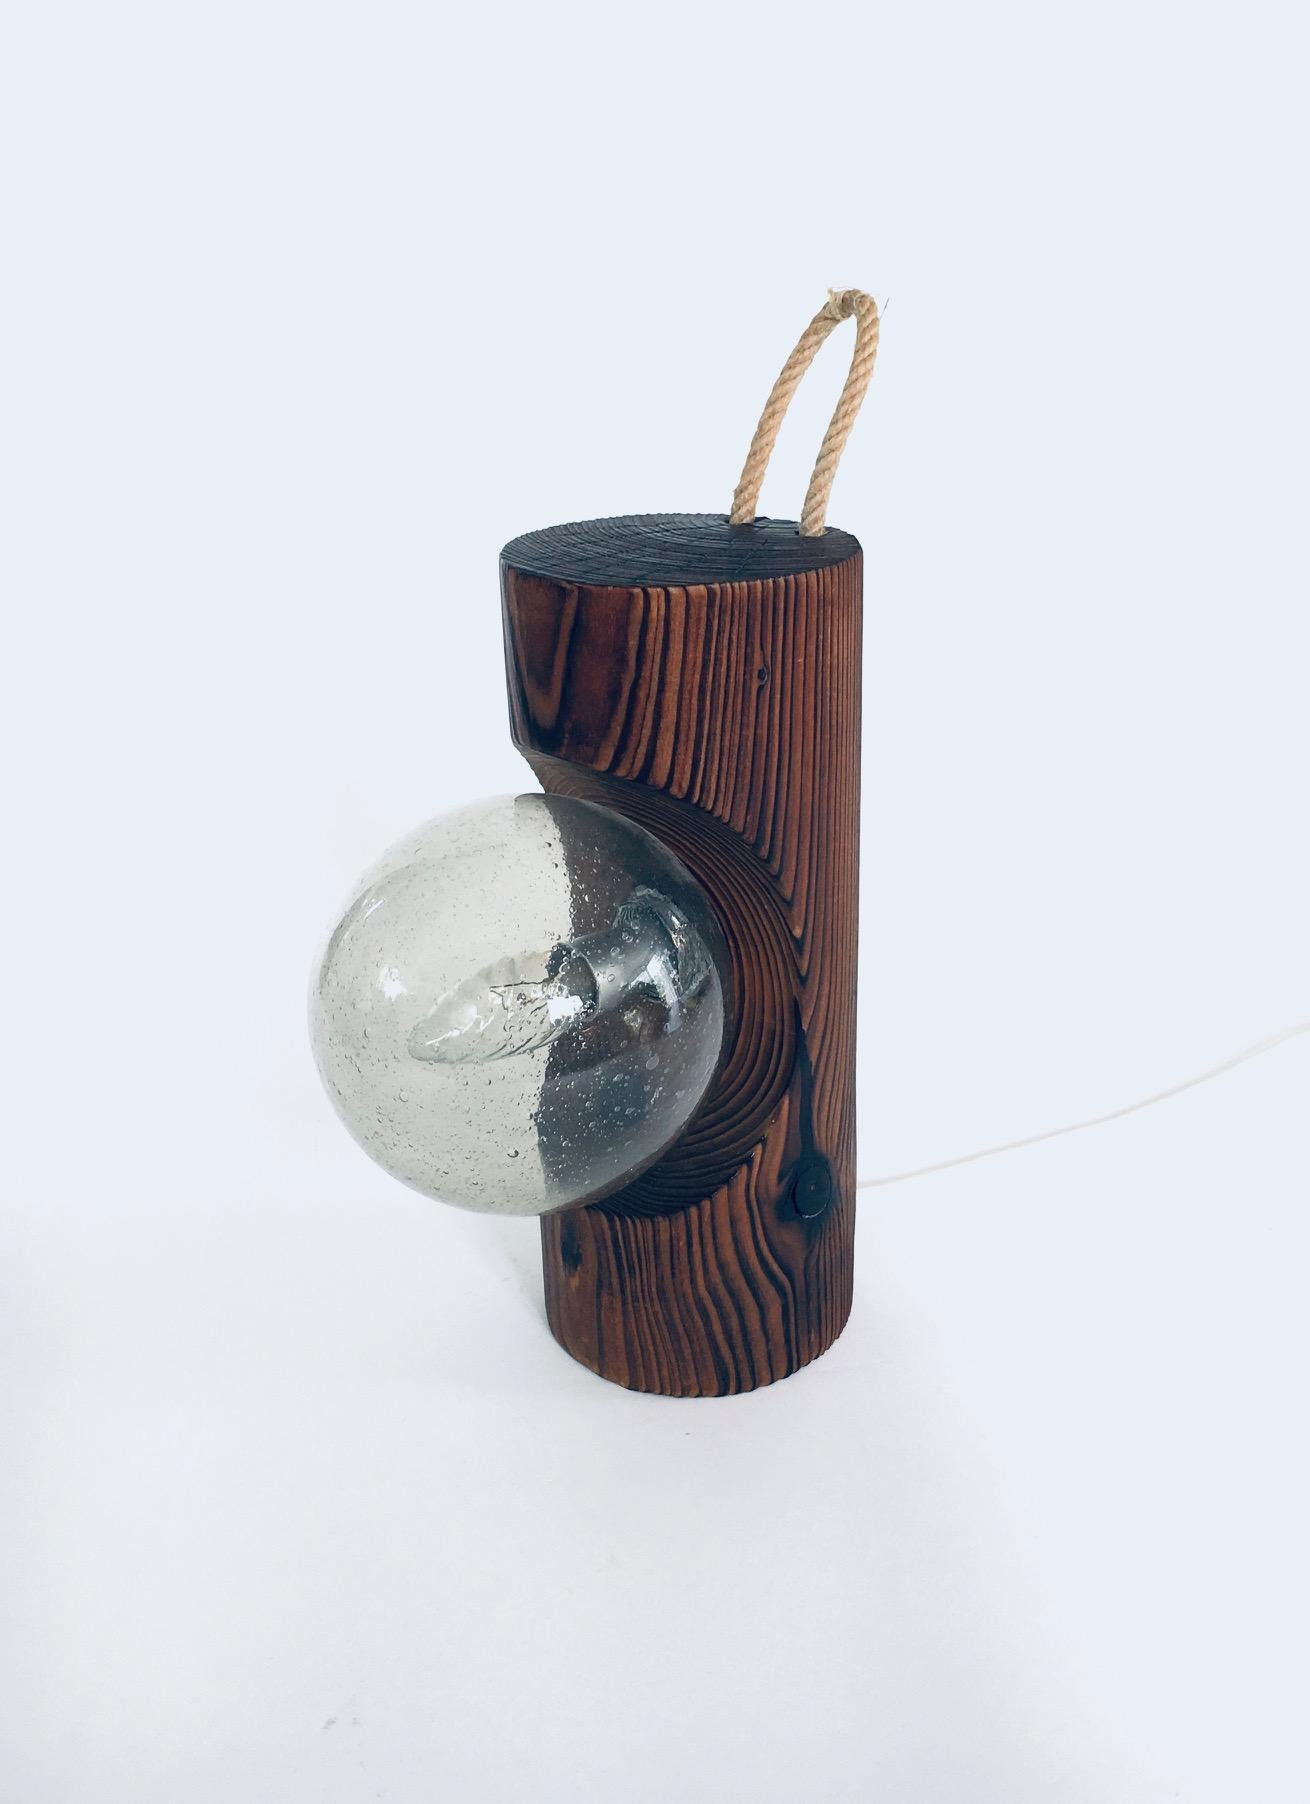 Brutalist Design Wood Table or Wall Lamp by Temde Leuchten, Switzerland 1960's For Sale 4